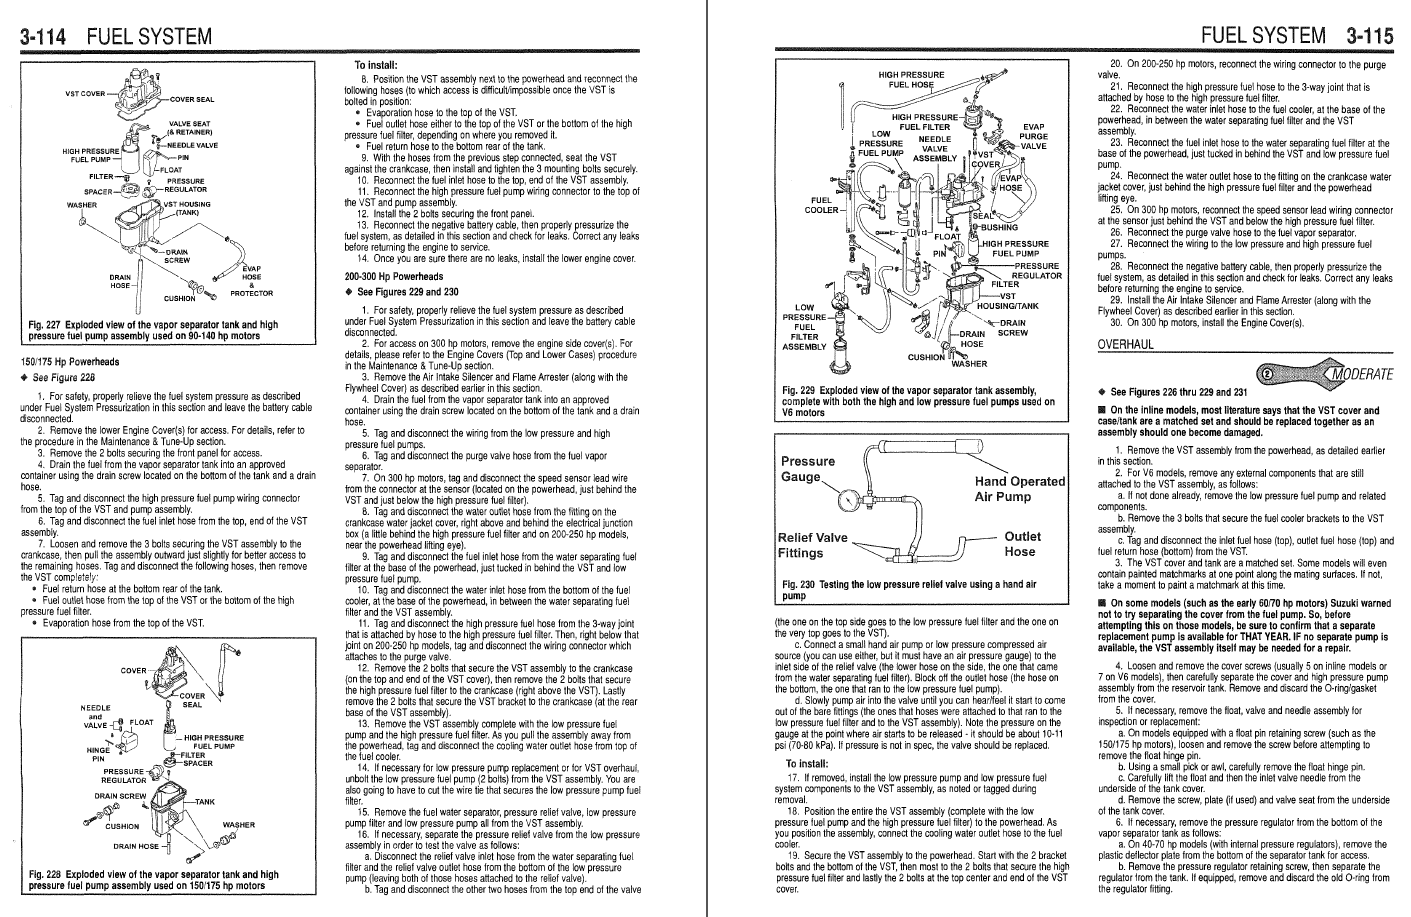 1996 Johnson Outboard Manual Free Download - listread